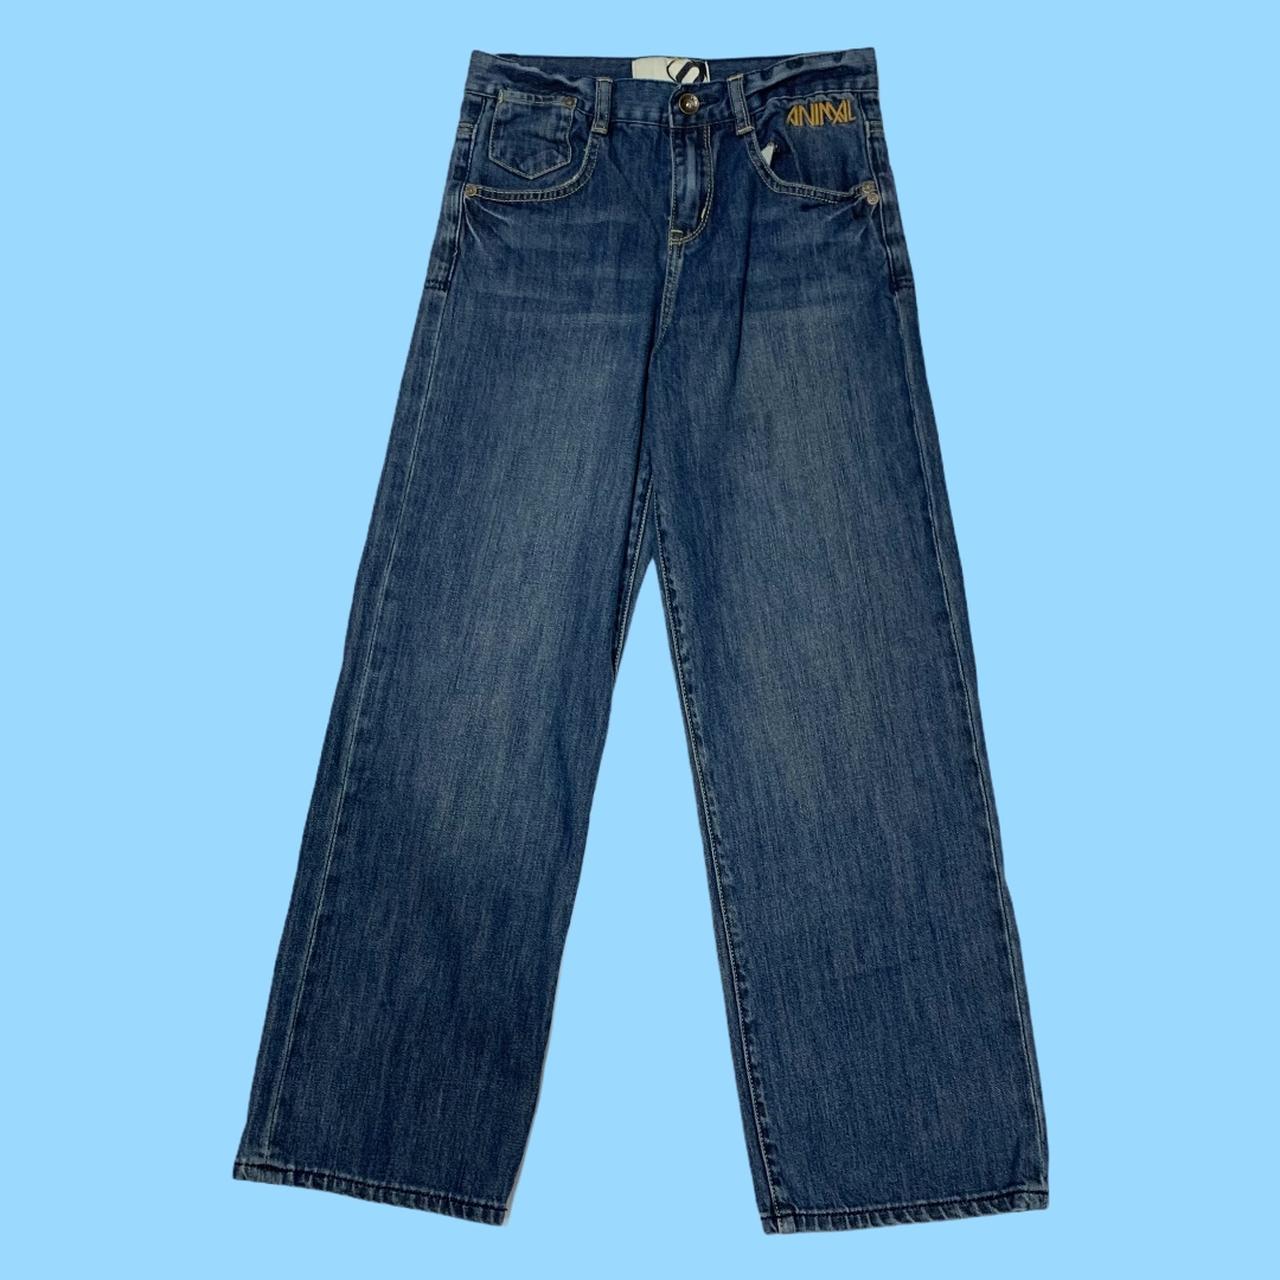 Kids Animal straight/wide leg jeans. COLOUR: blue... - Depop